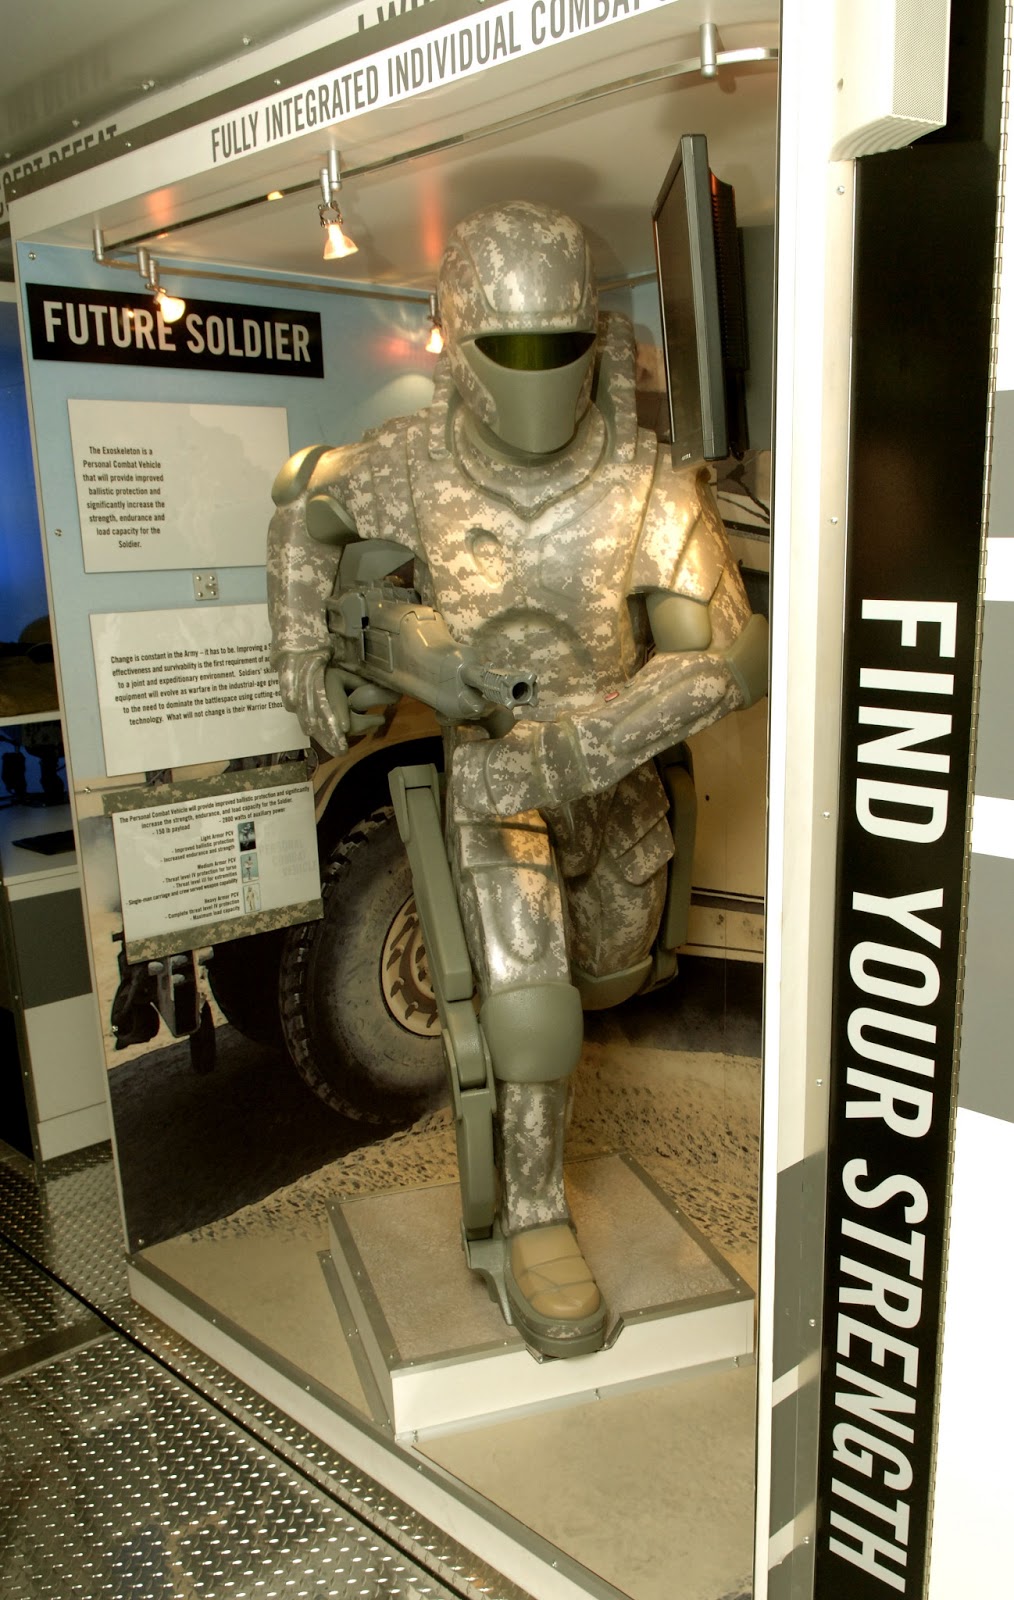 http://1.bp.blogspot.com/-bkYKwBUlm3A/UaeUGeF0hVI/AAAAAAAAFLU/GyD5D8hI8BM/s1600/US_Army_powered_armor.jpg